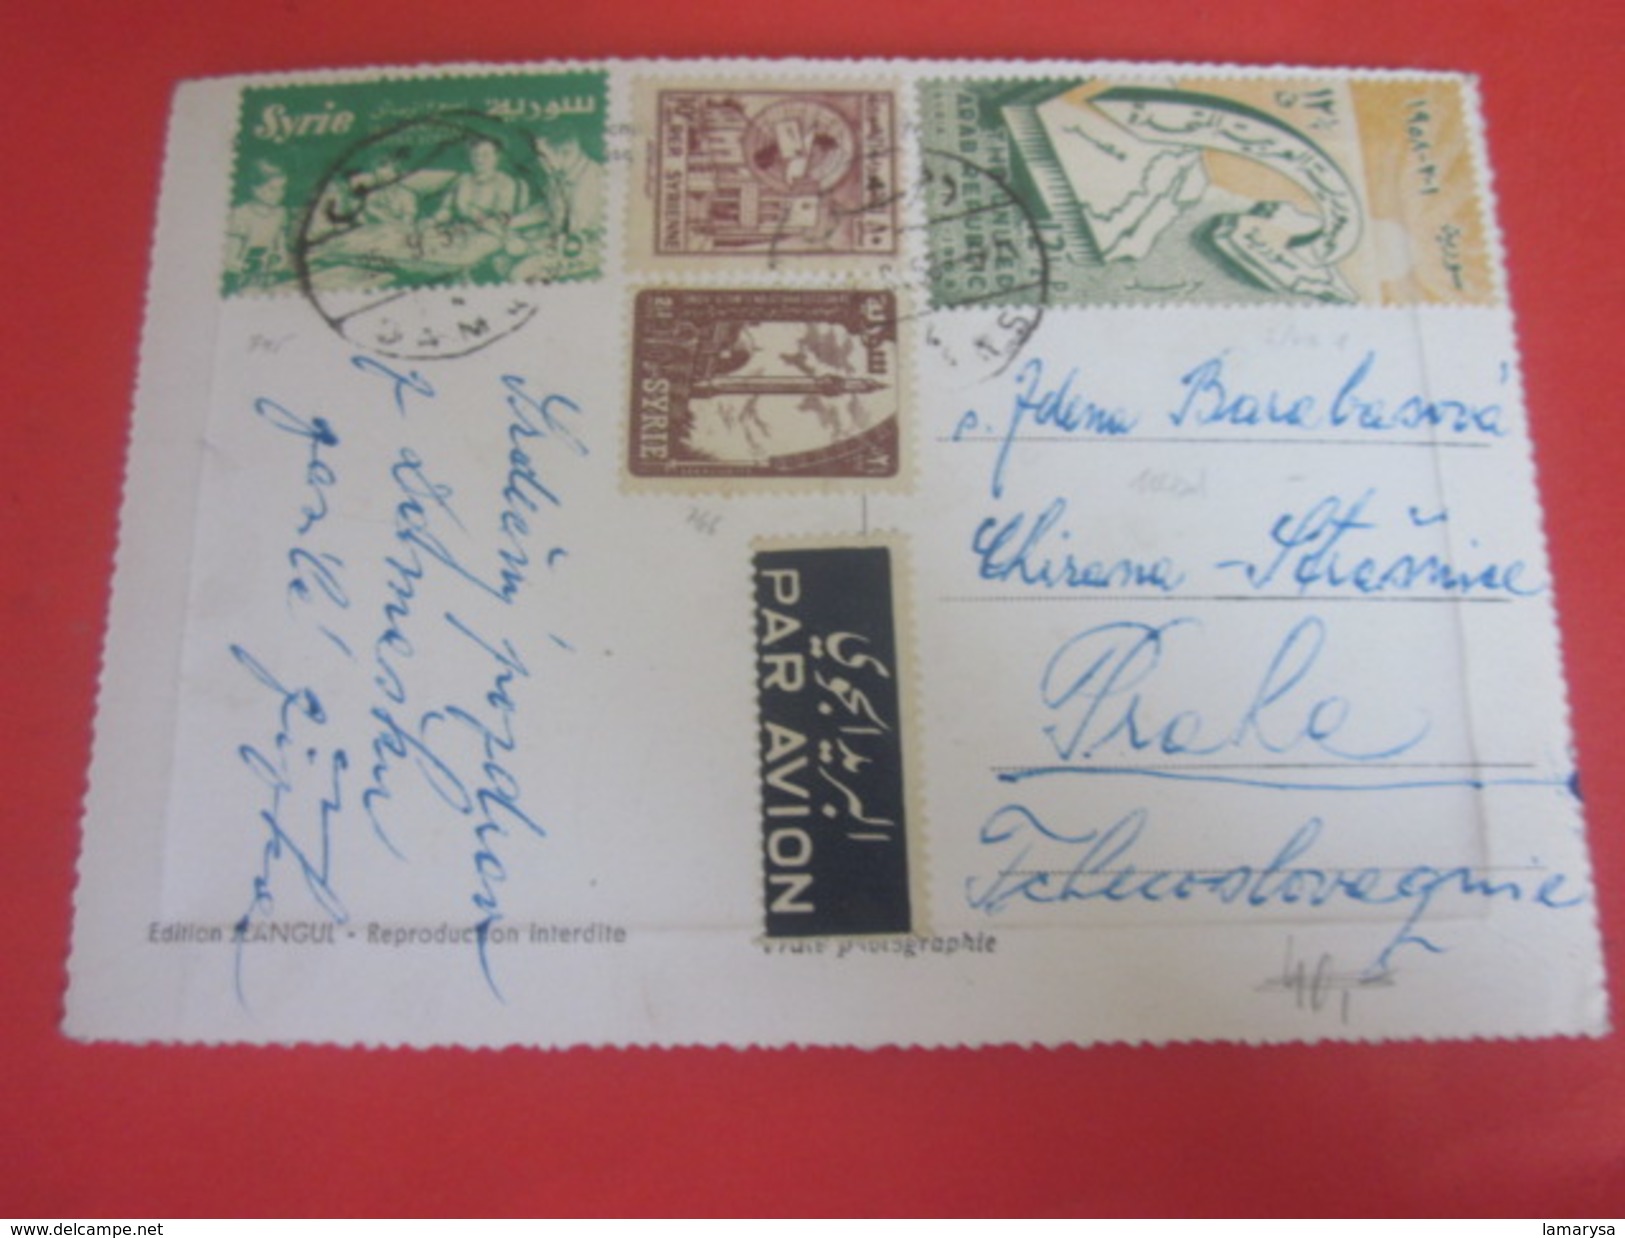 Arab Republic Of Syria  RER Syrie Poscard>Mosquée Masjid Shahab>Lettre Letter>Stamp>By Air Mail=>Prague Tchécoslovaquie - Syria